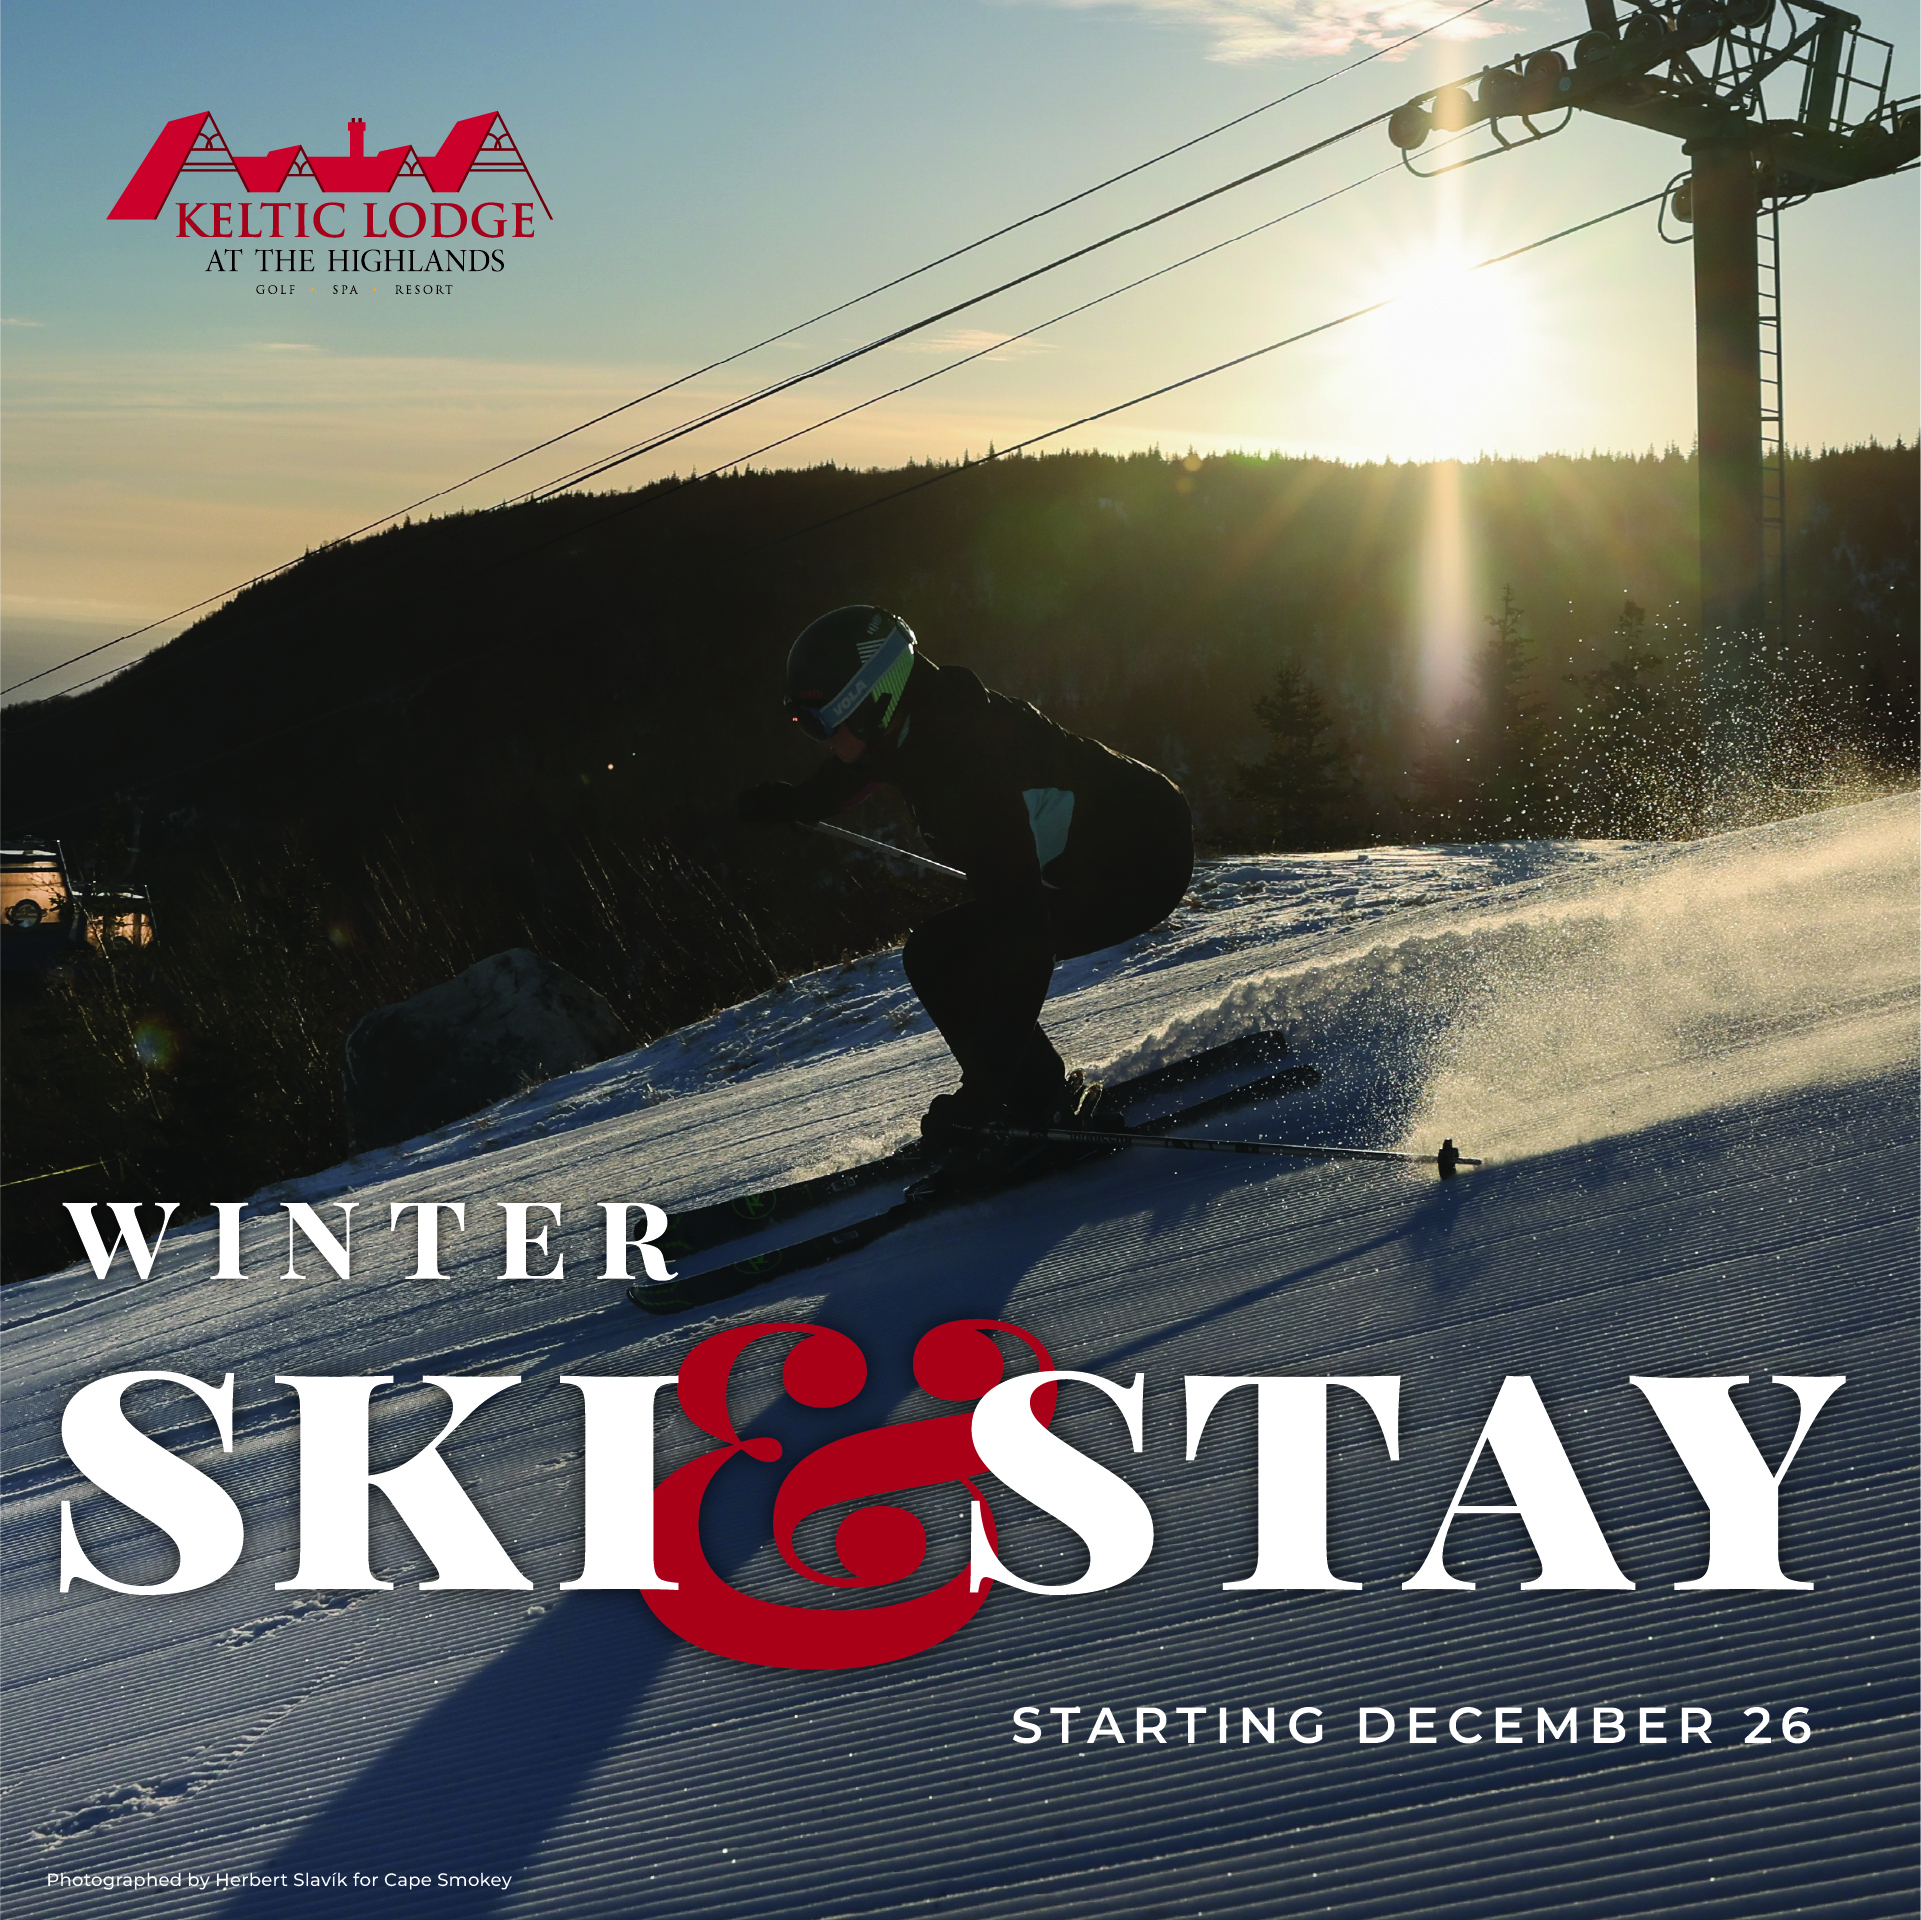 Winter Ski & Stay Package: Starting December 26